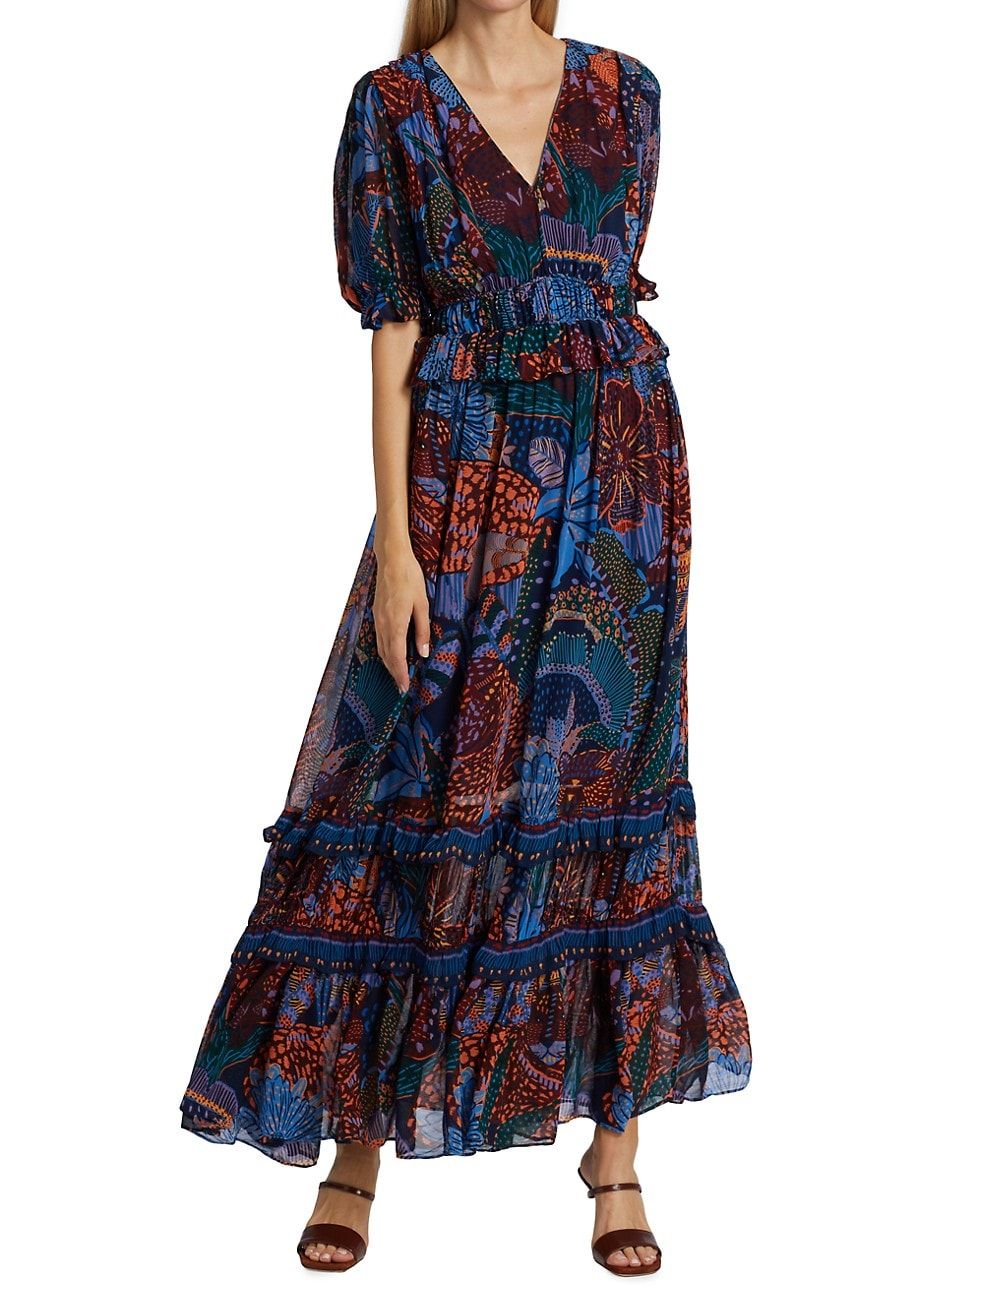 Floral Maxi Dress | Saks Fifth Avenue